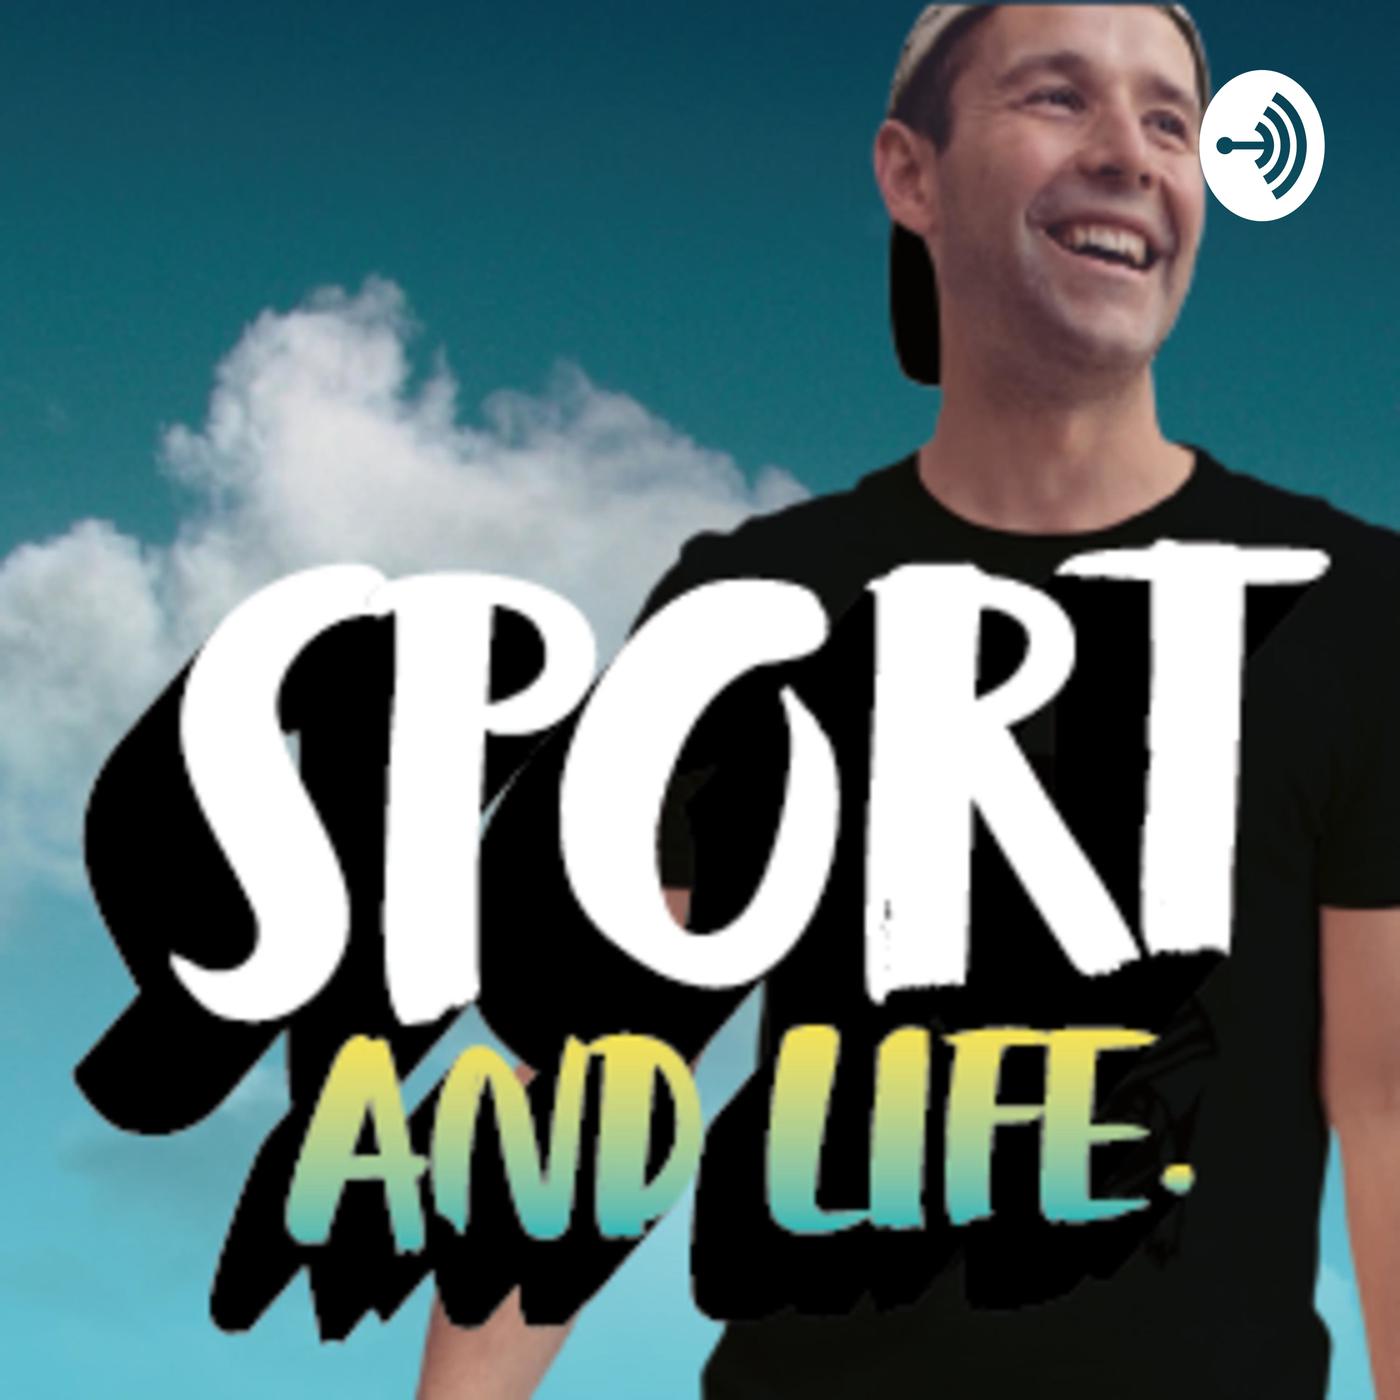 Podcast with Ed Draper, Sky Sports